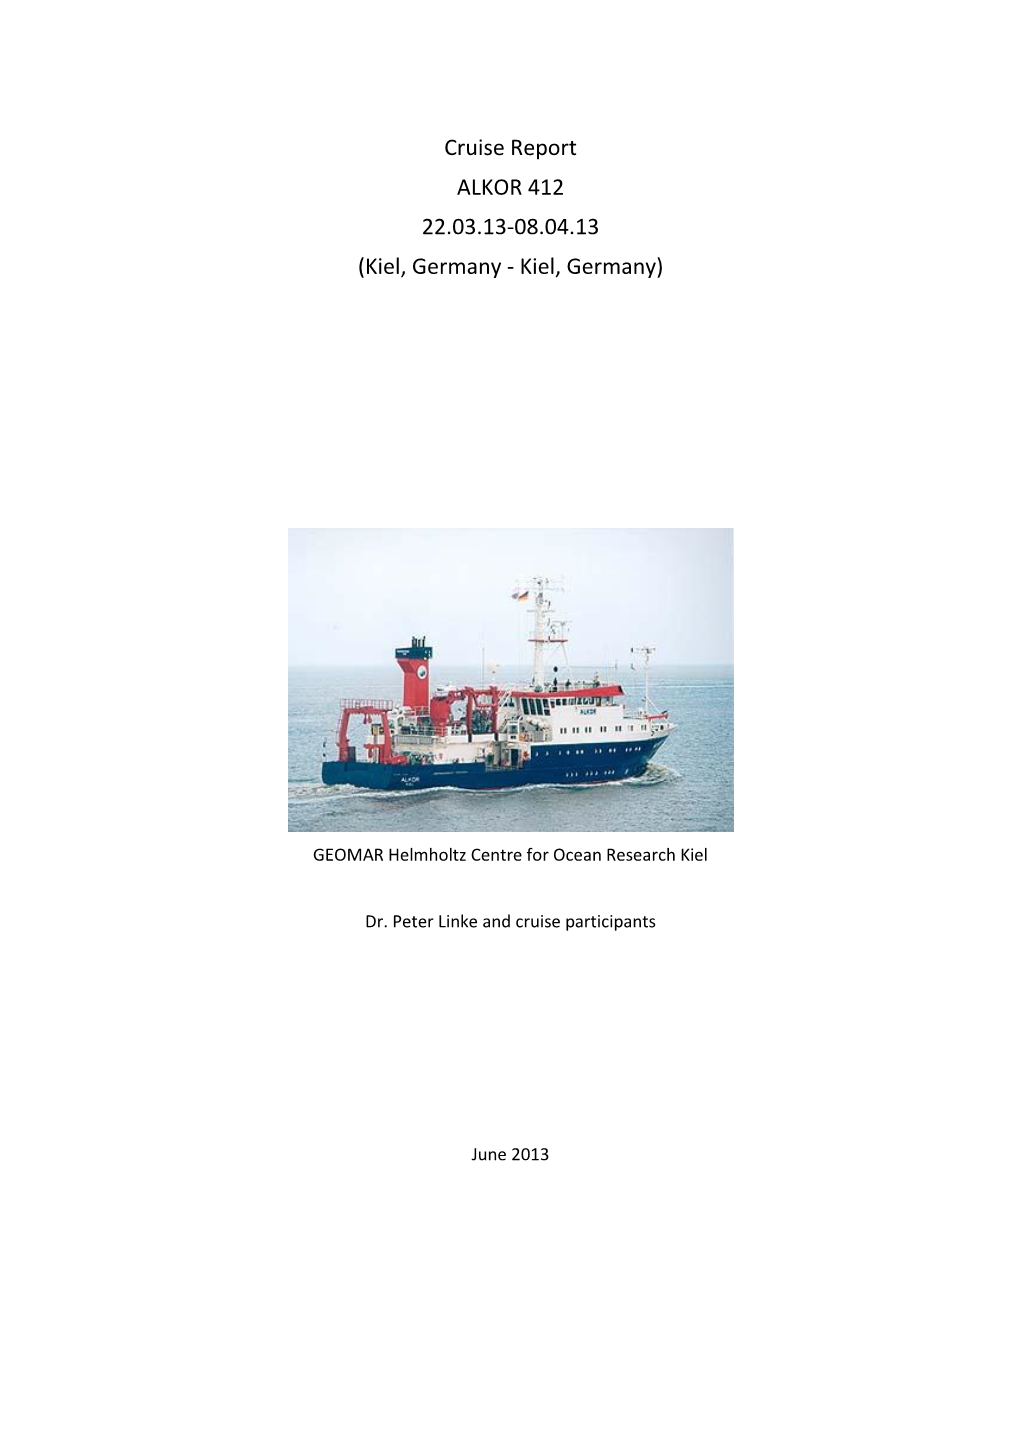 Cruise Report ALKOR 412 22.03.13-08.04.13 (Kiel, Germany - Kiel, Germany)